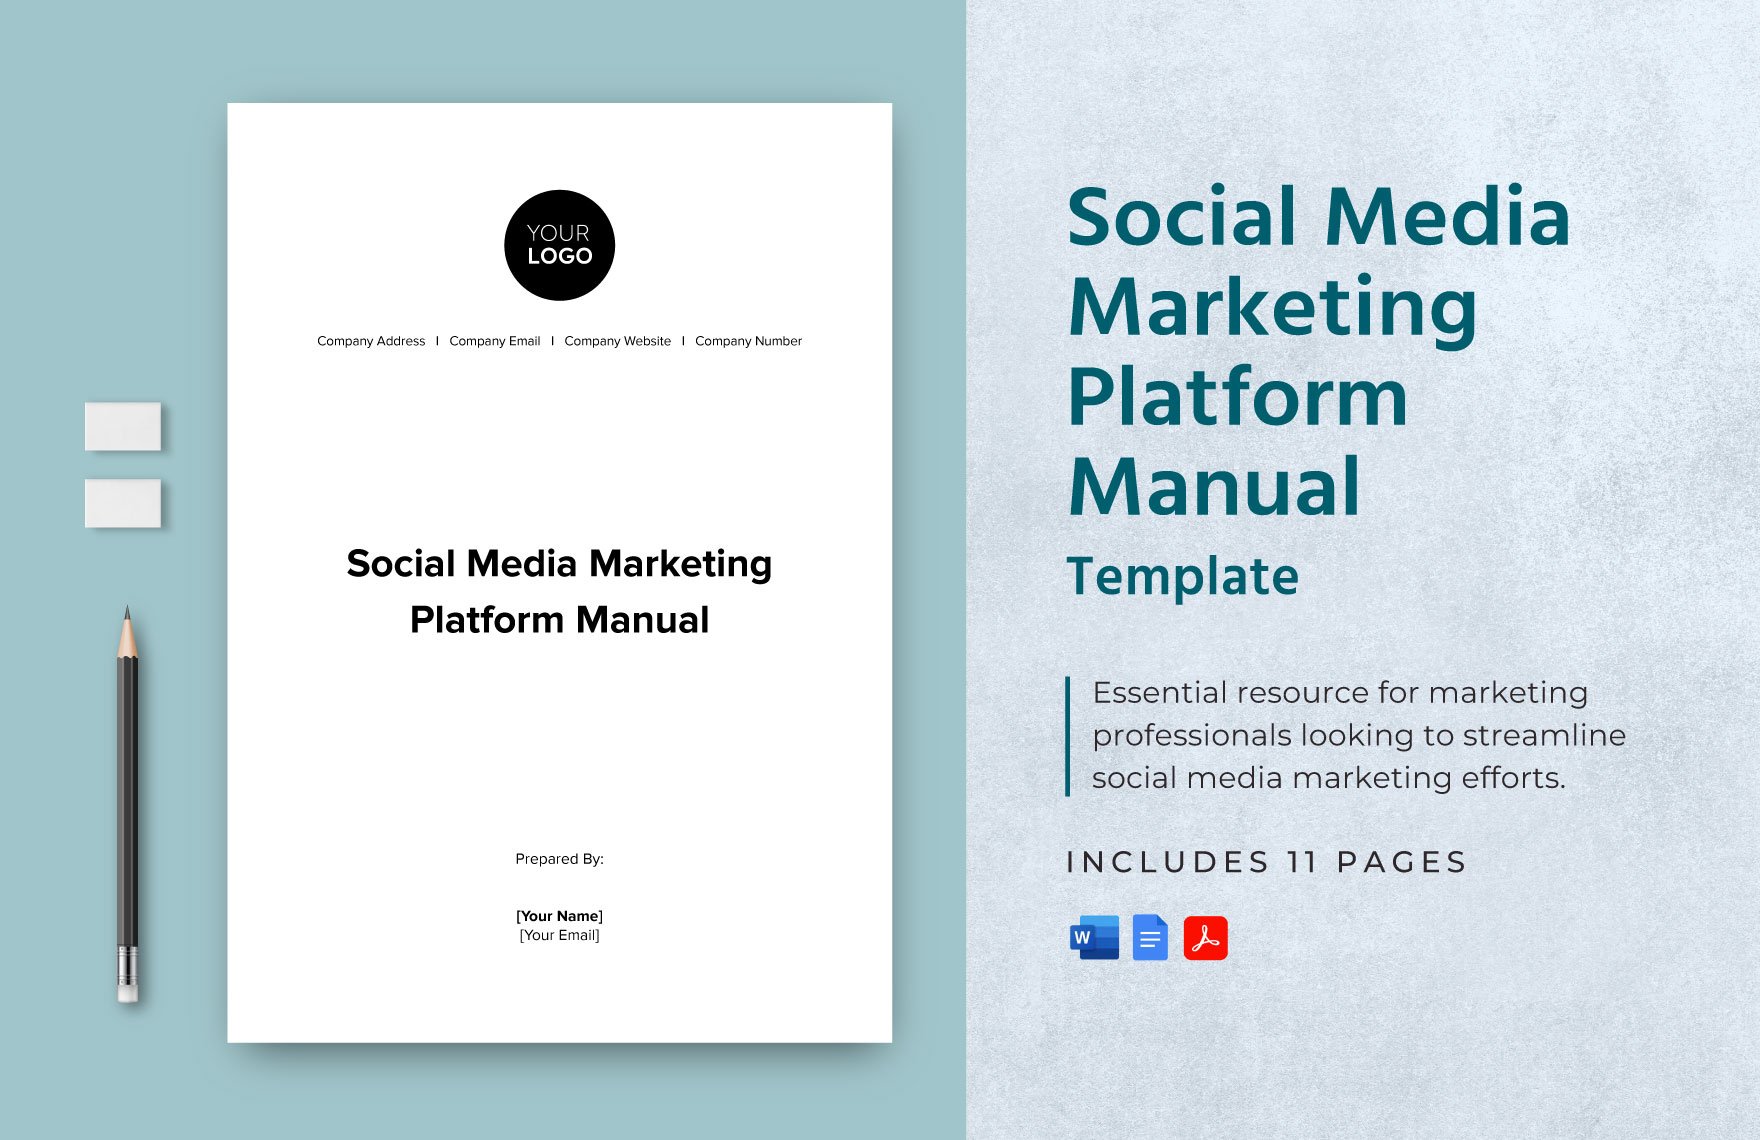 Social Media Marketing Platform Manual Template in Word, Google Docs, PDF